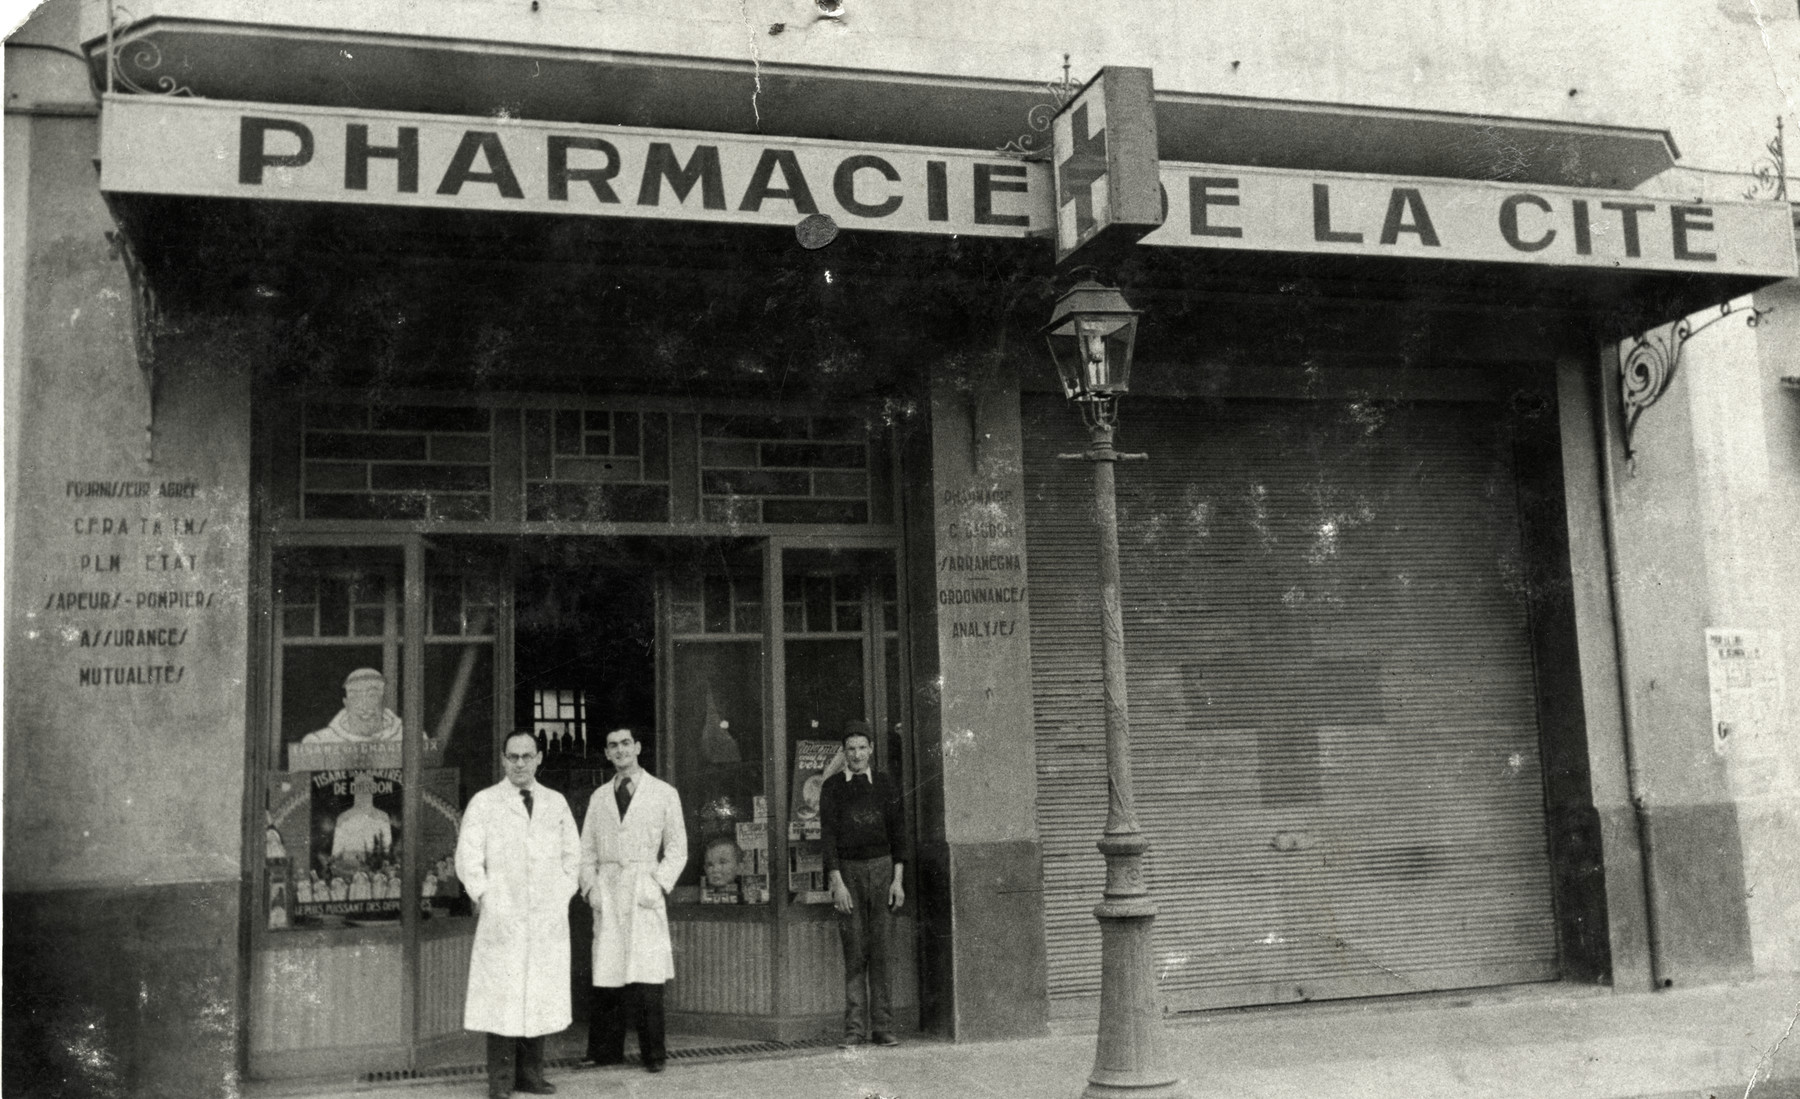 Josef Roger Cheraki stands in front of his pharmacy in Algiers.